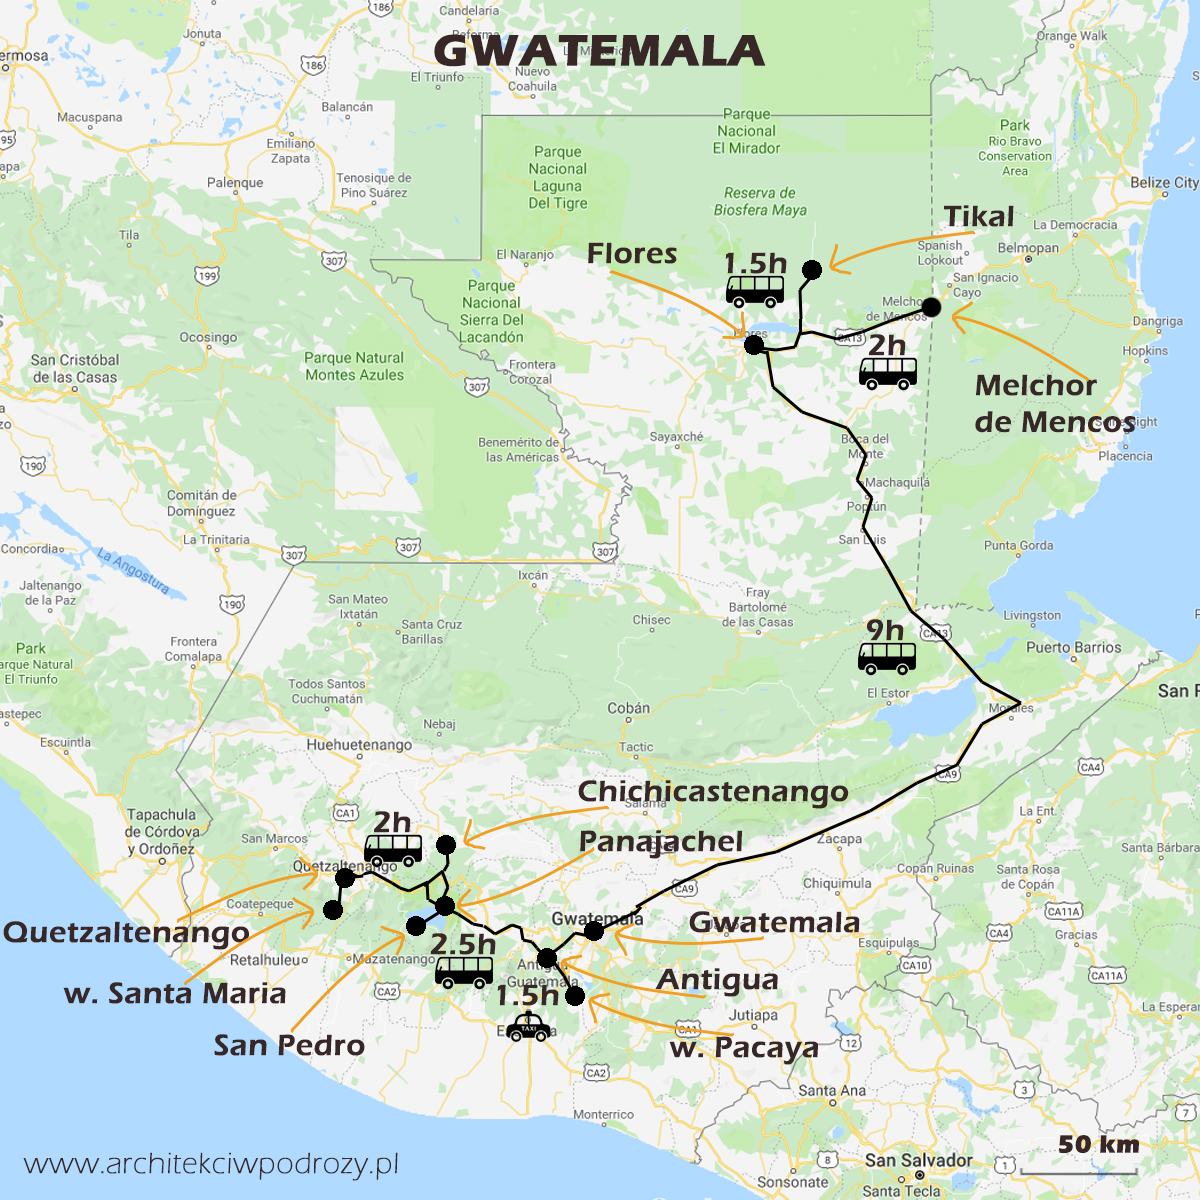 01 GWATEMALA mapa - Gwatemala